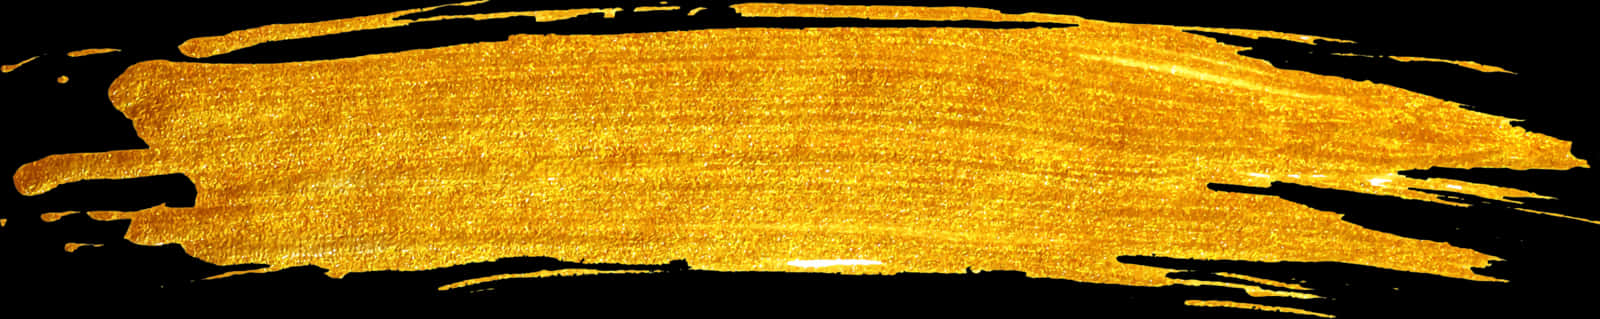 Golden Brush Stroke Texture PNG